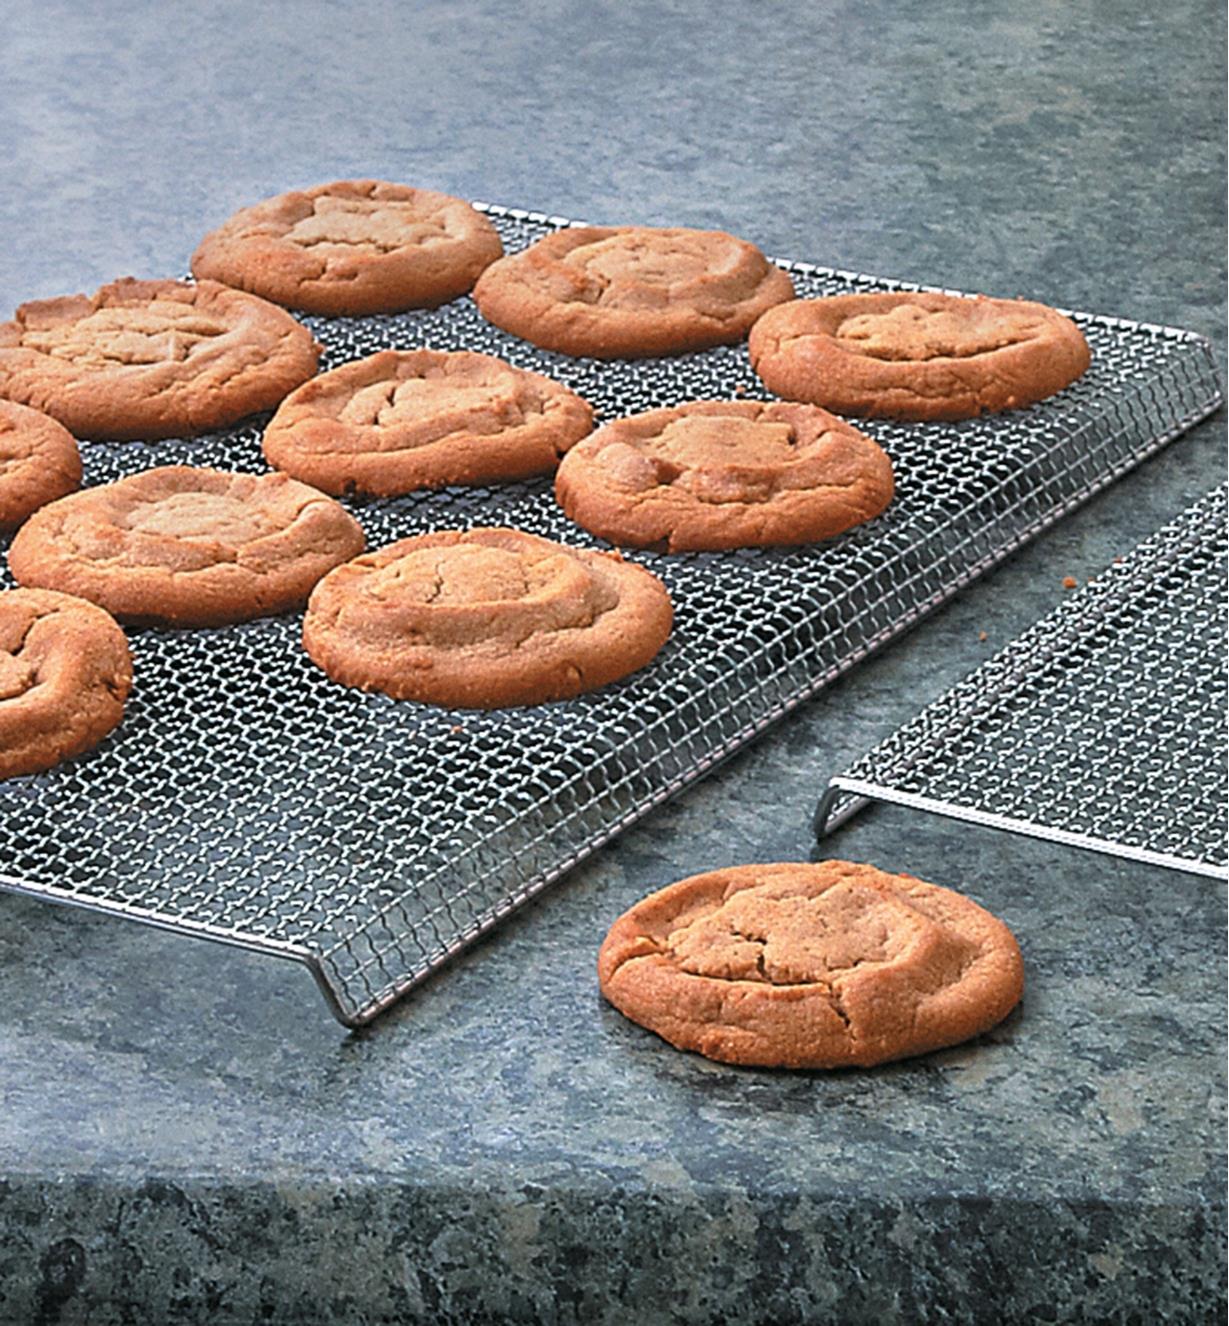 Cookies cooling on cookie/bacon racks